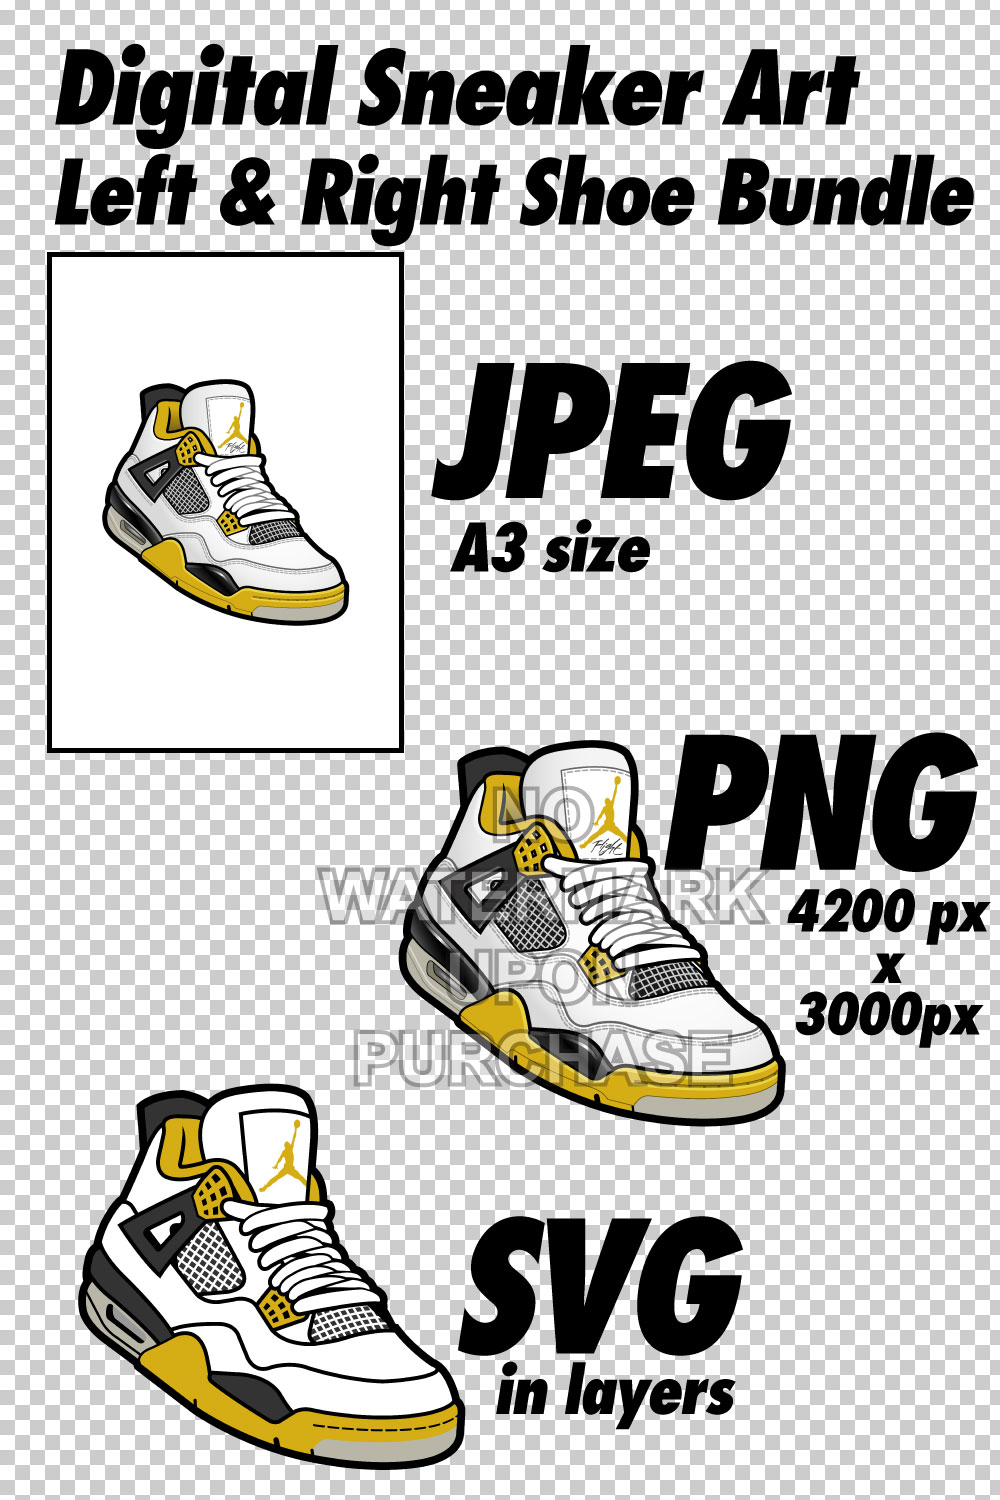 Air Jordan 4 Vivid Sulfur JPEG PNG SVG Sneaker Art Left & Right Shoe Bundle Digital Download pinterest preview image.